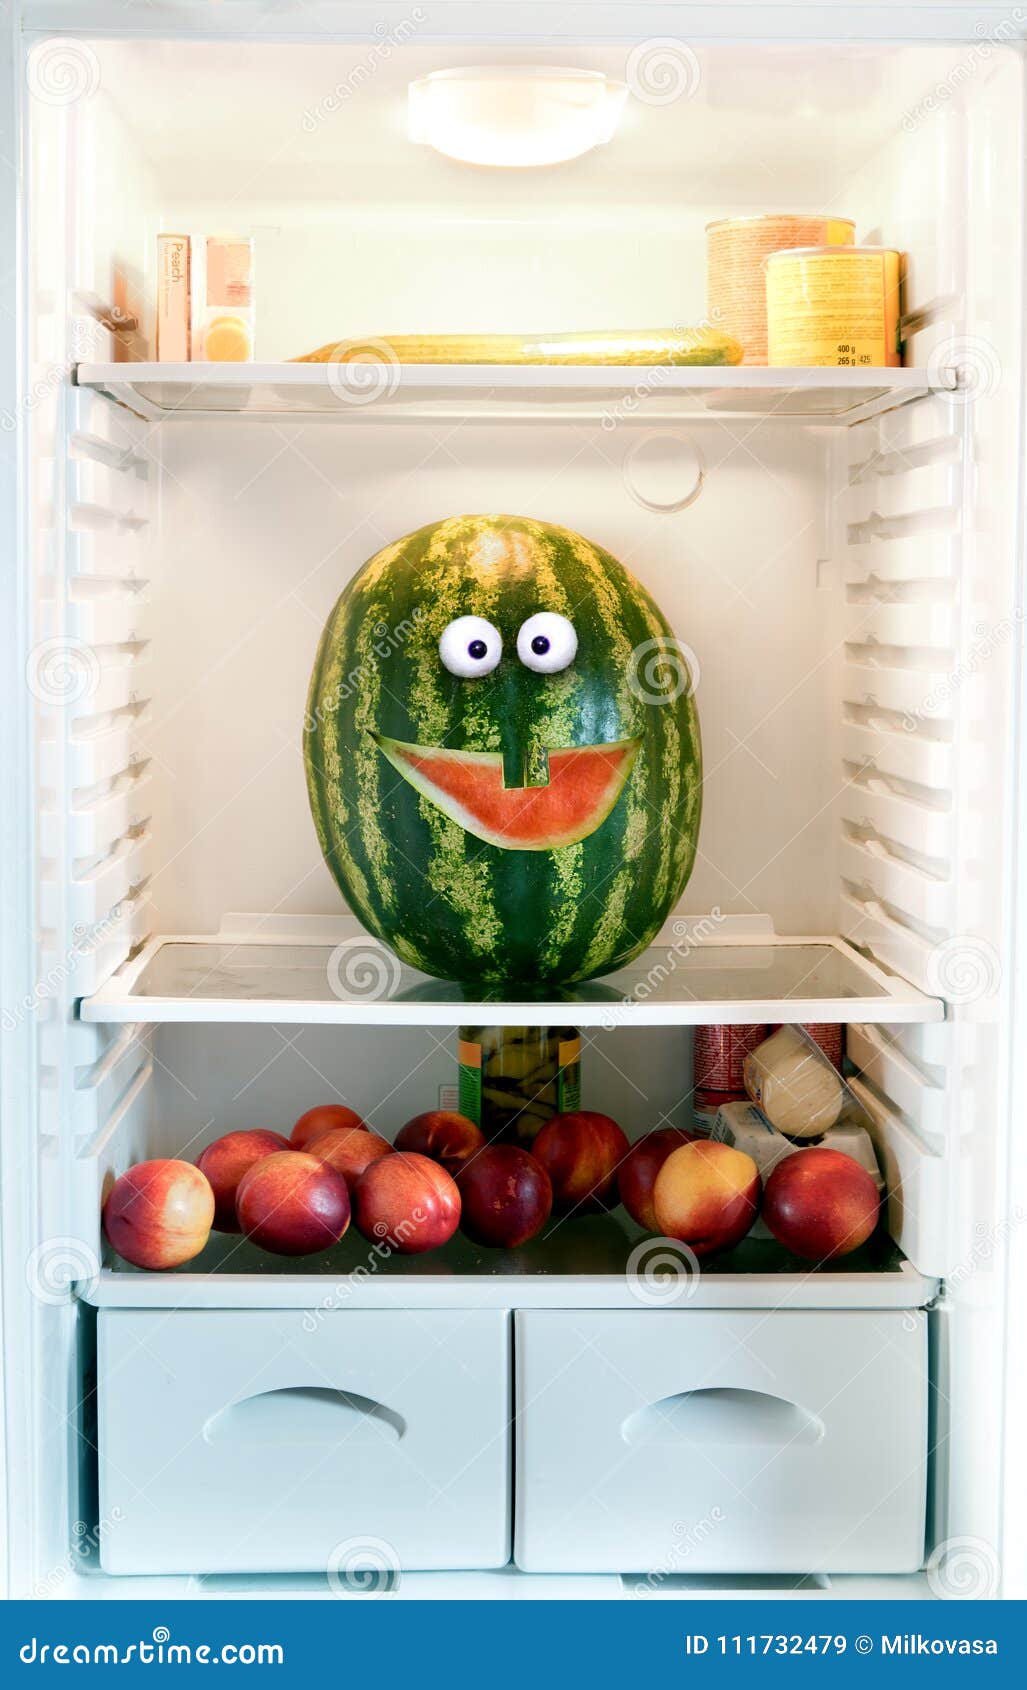 There are bananas in the fridge. Холодильник для арбуза. Смешной холодильник для арбуза. Переносной холодильник для арбуза. Холодильник для арбуза Мем.